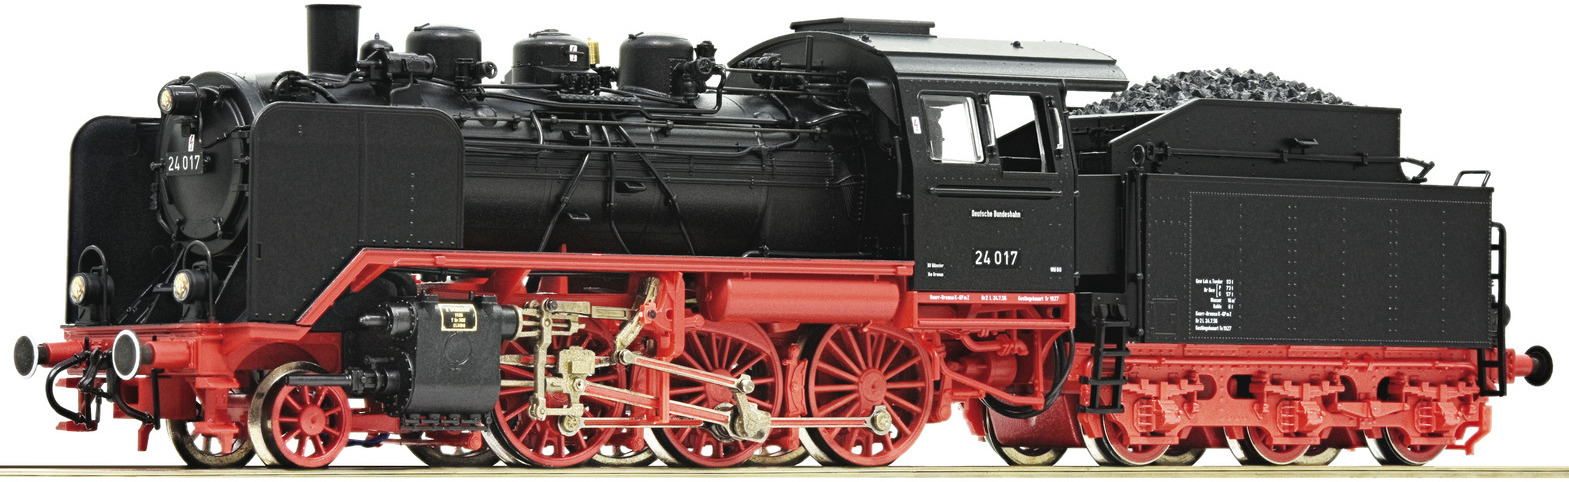 Roco 68216 DRG Class 24 24017 Image